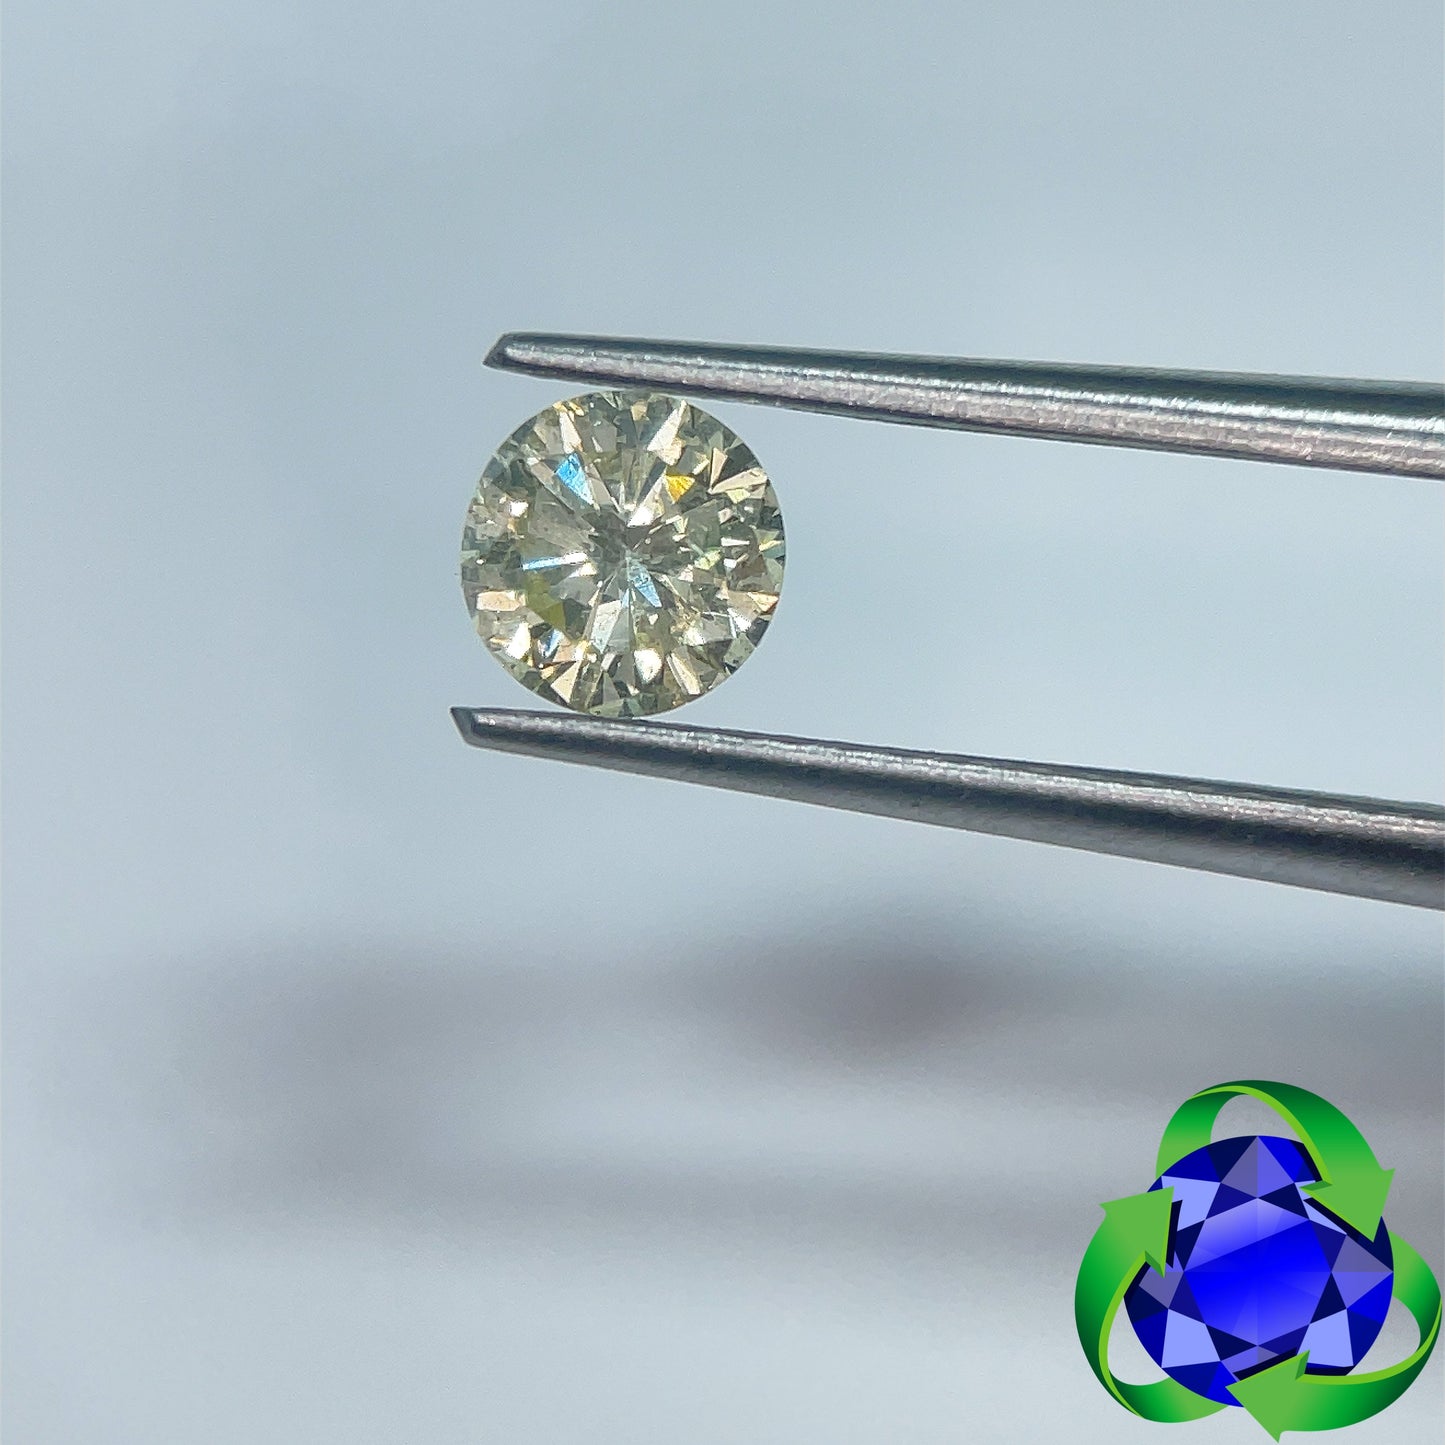 Round Brilliant Cut Diamond - U-V I2 - 0.42ct